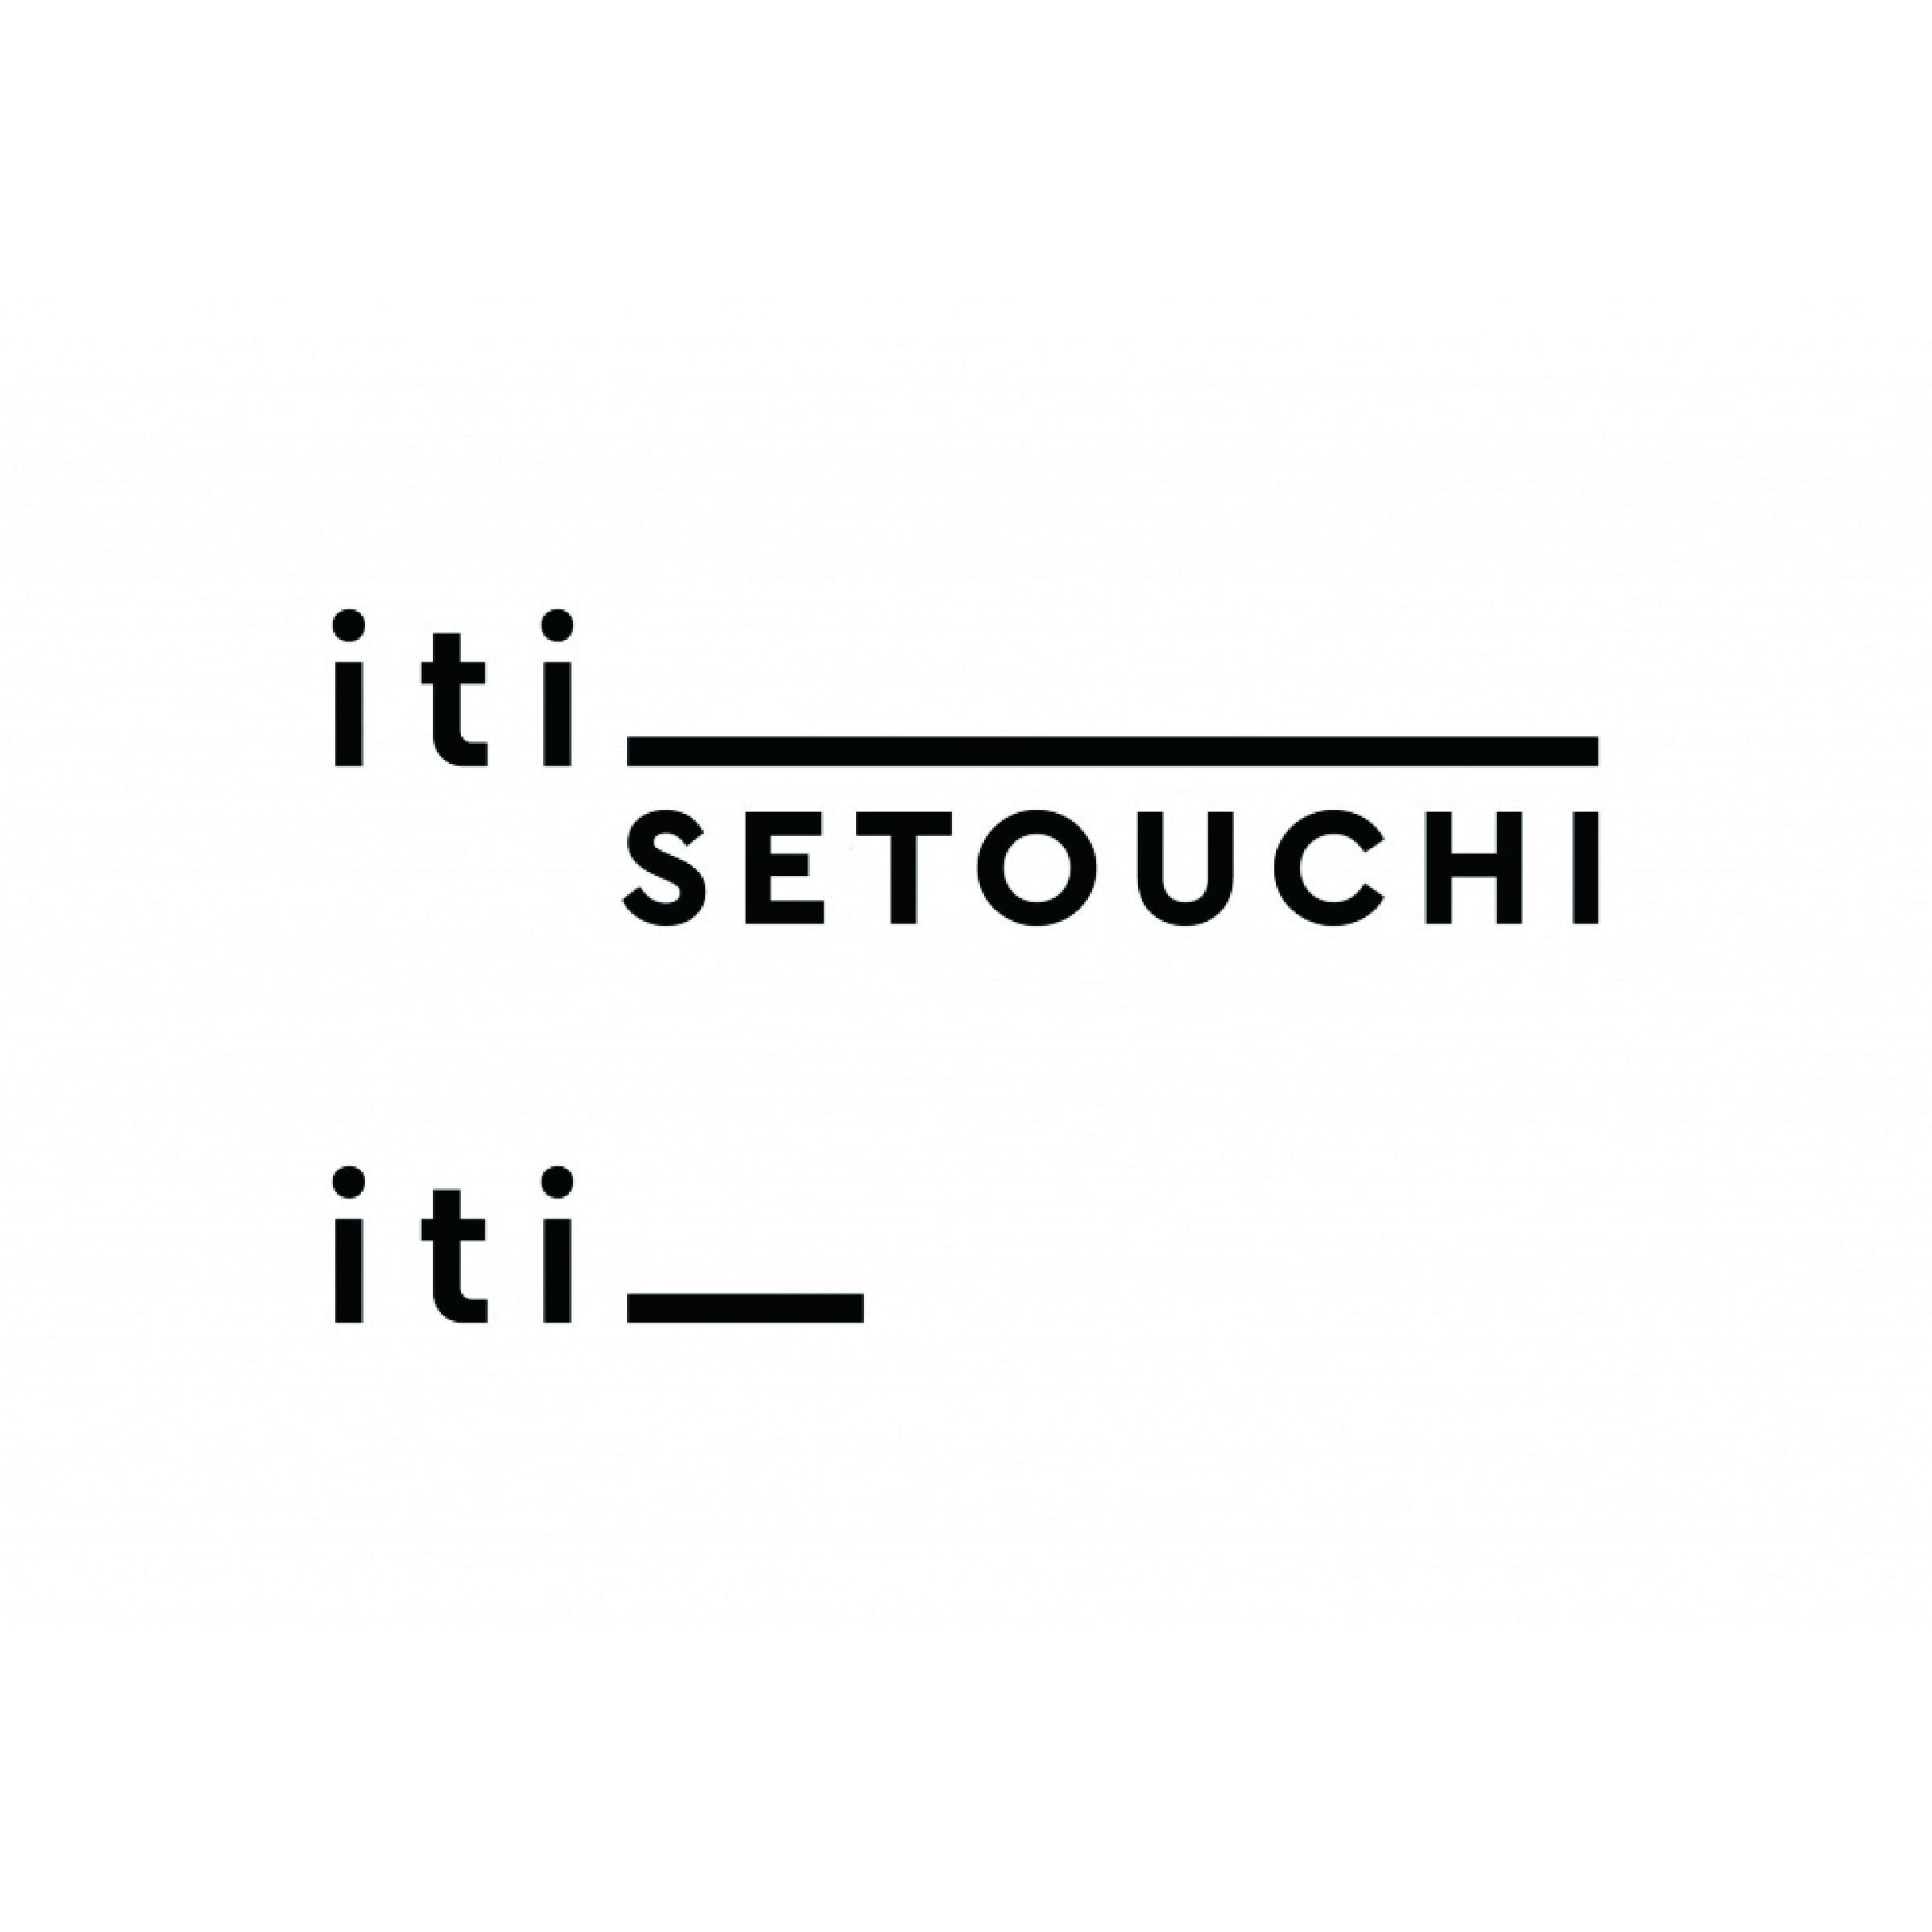 iti SETOUCHI の「 i+i 」と「 _ 」